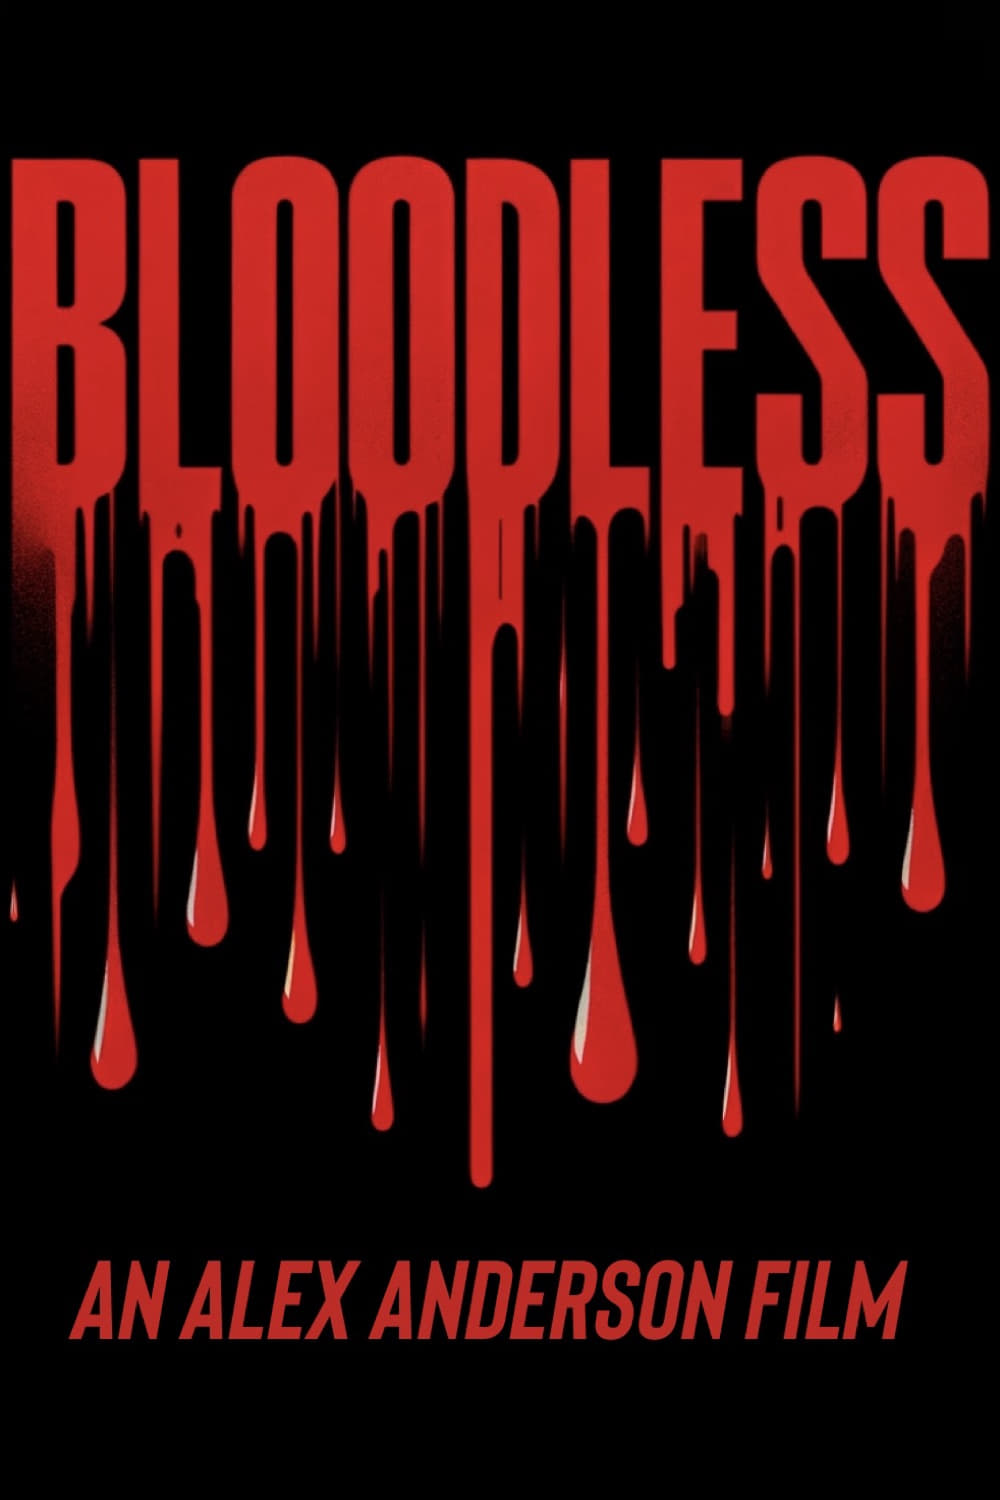 Bloodless